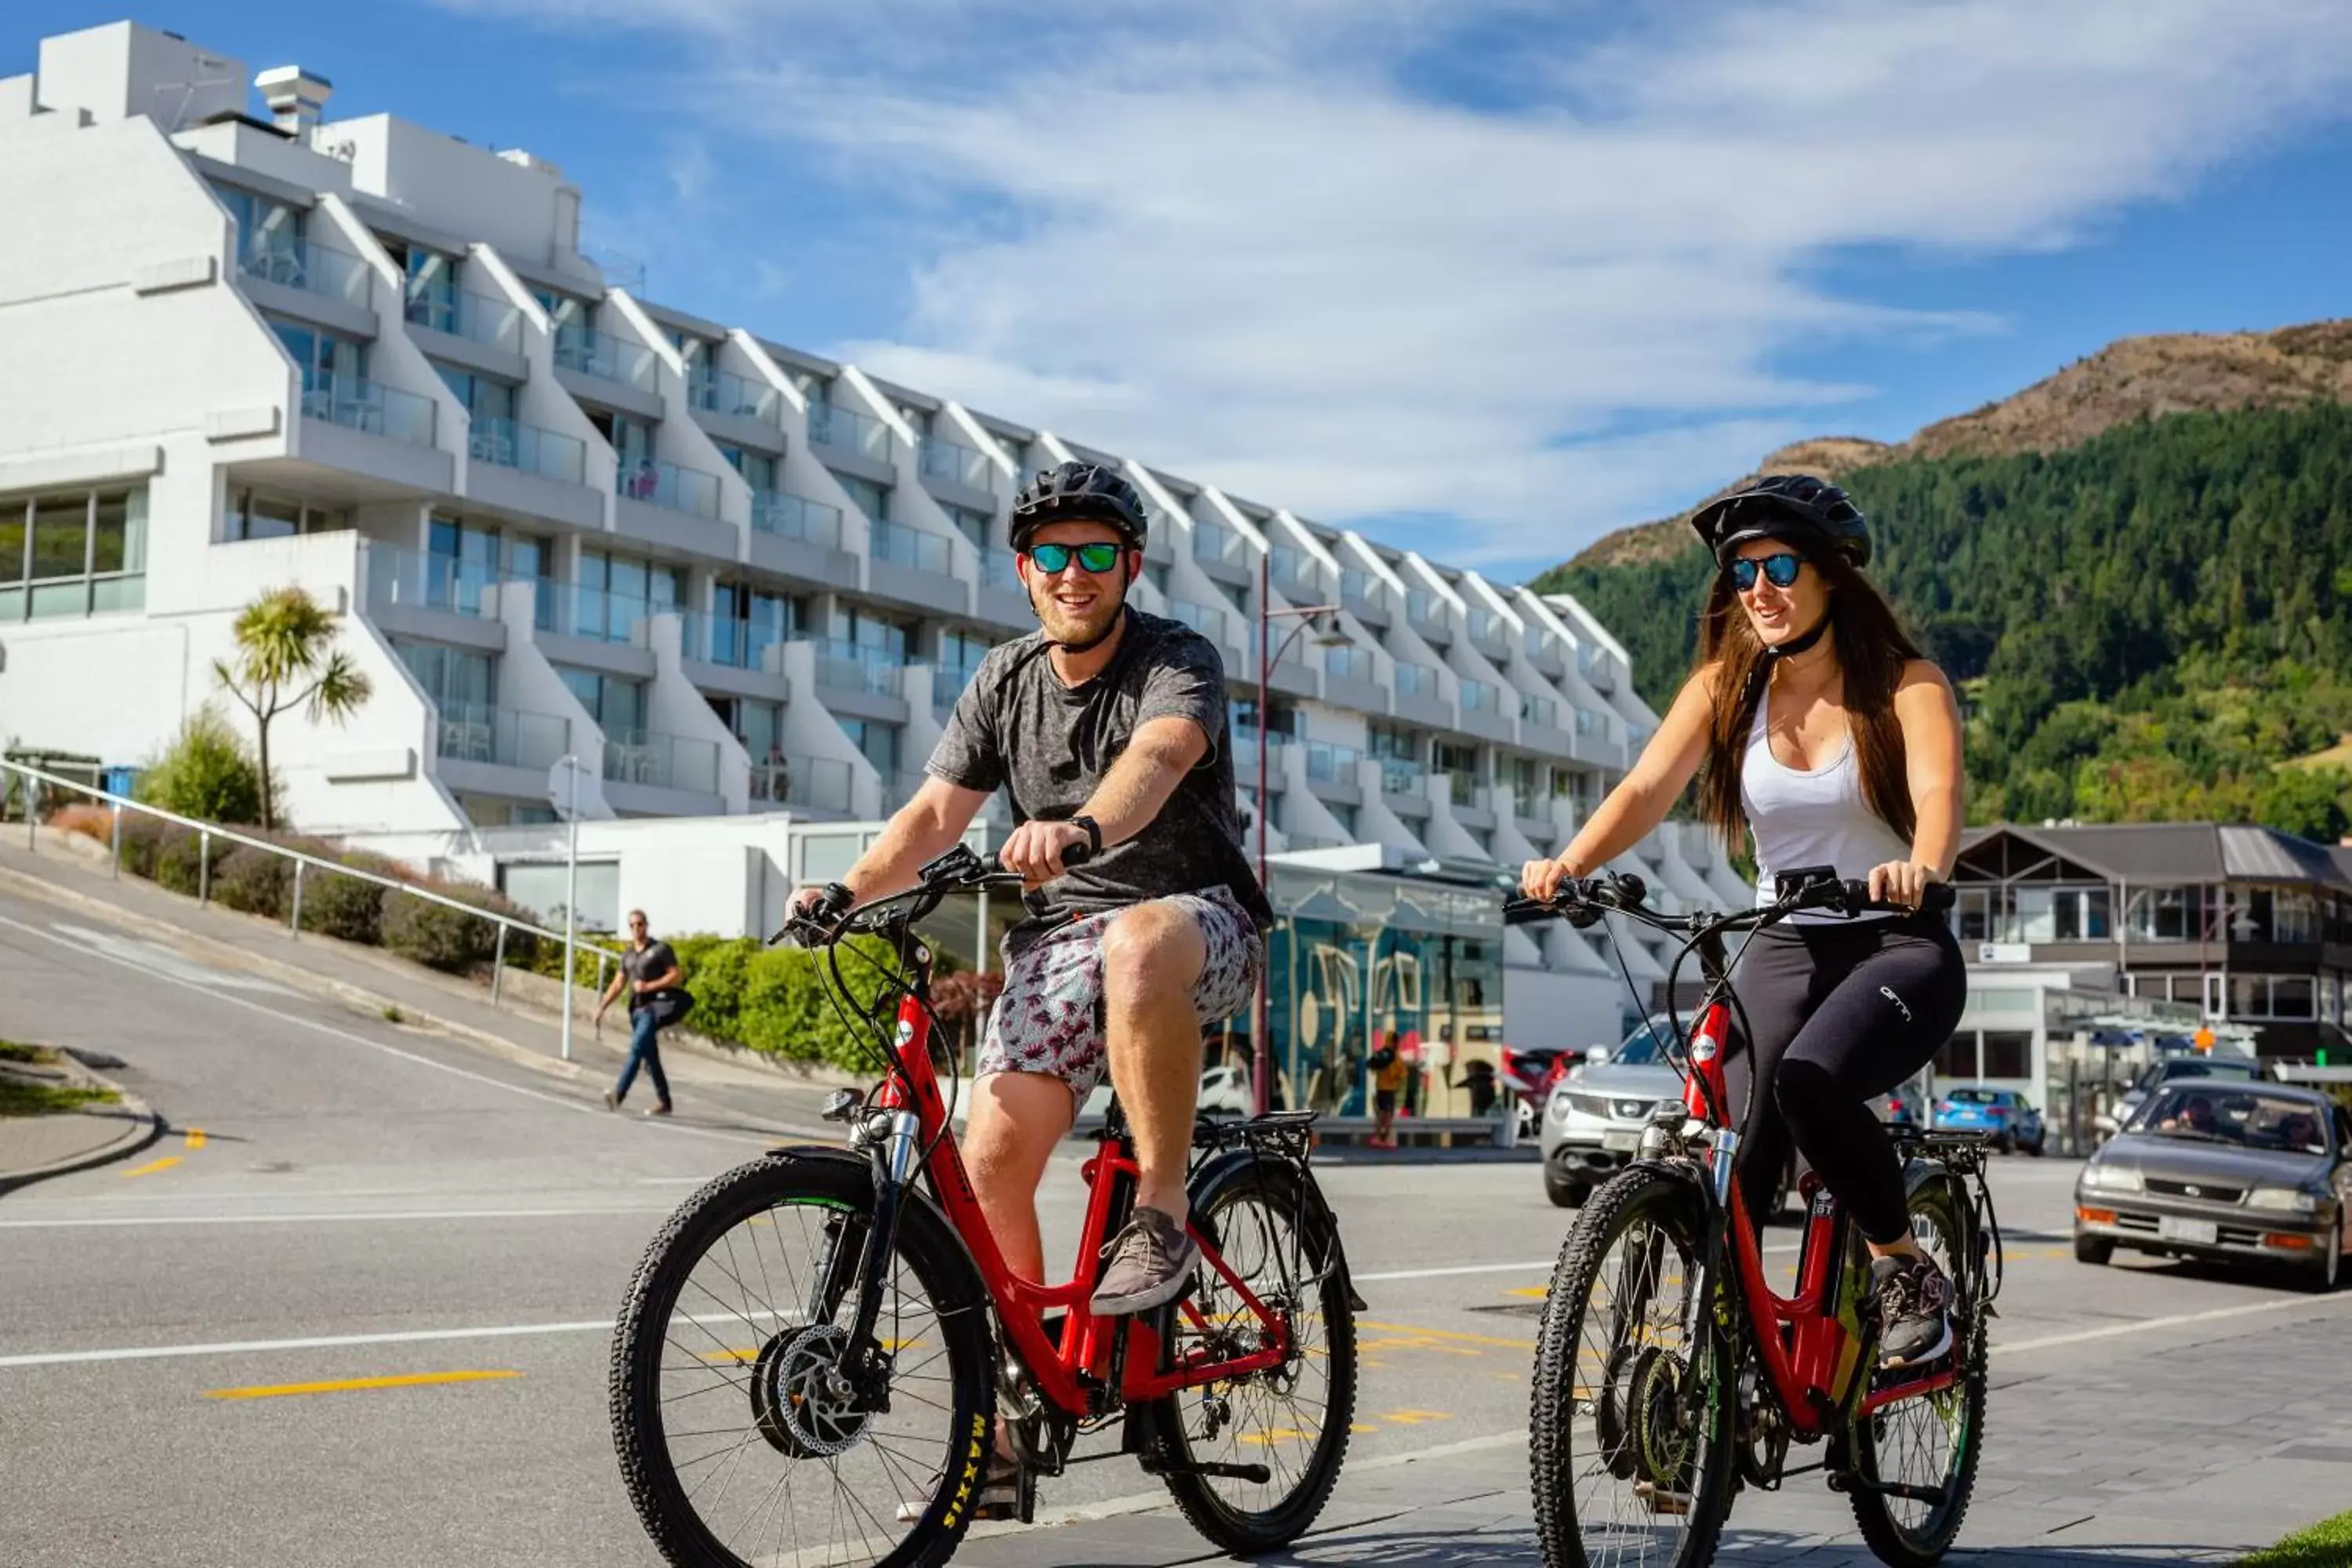 Cycling, Biking in Crowne Plaza Queenstown, an IHG Hotel